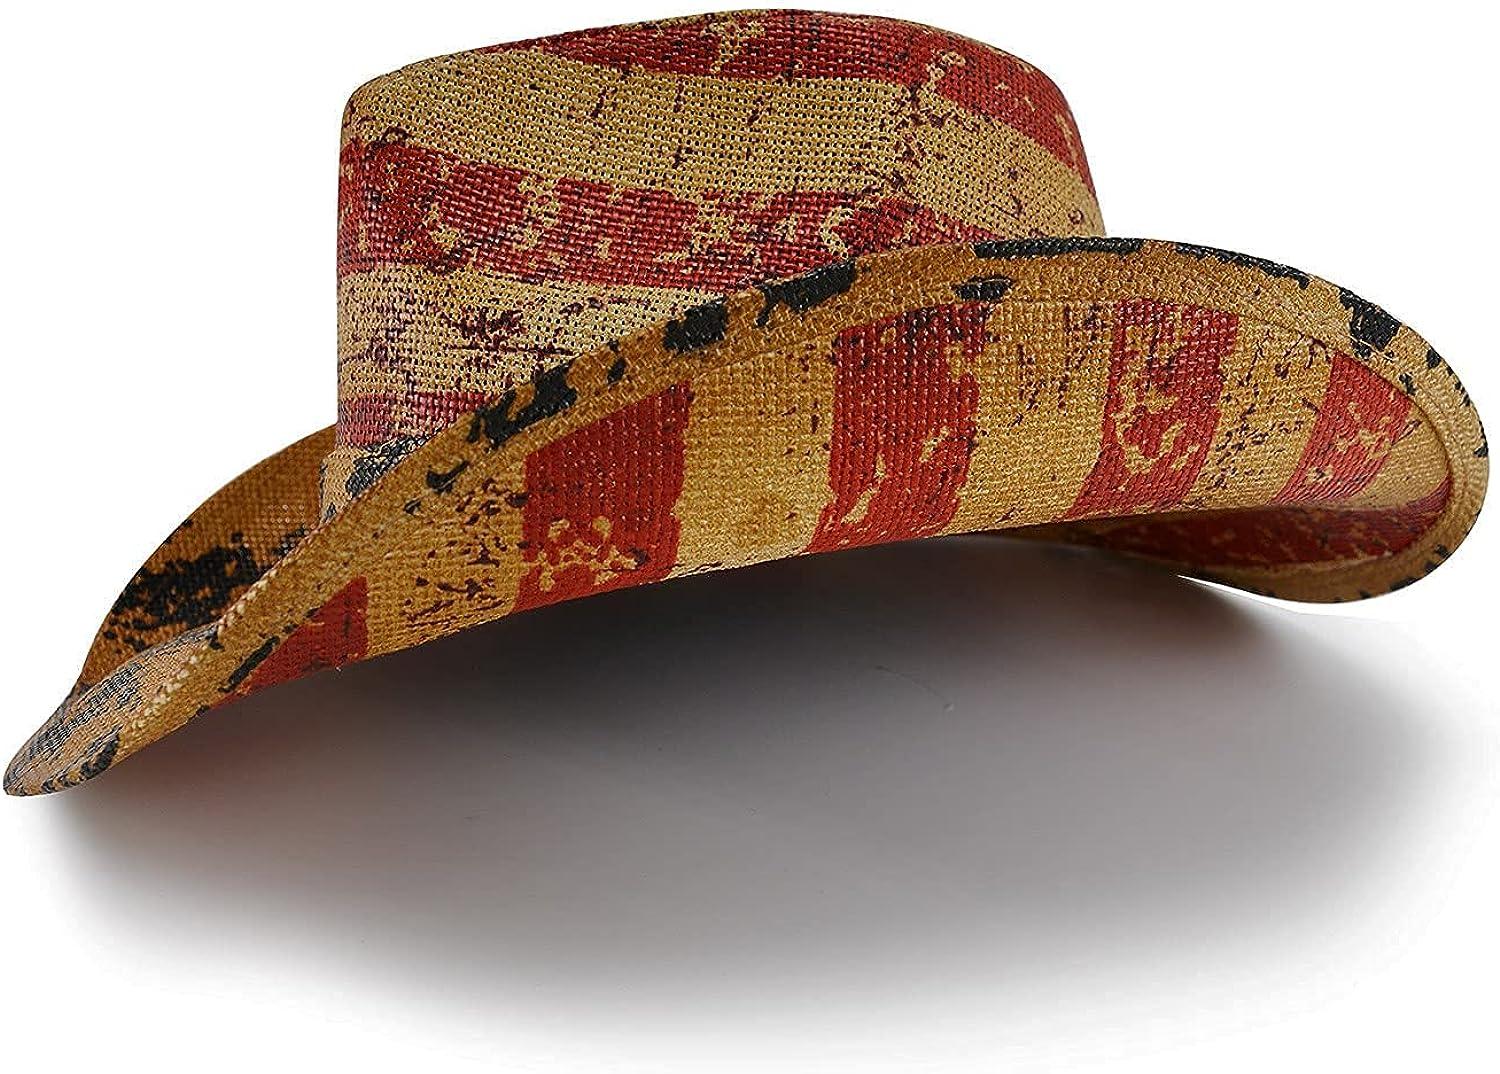 Vintage American Flag Cowboy Cowgirl Hat USA Star Stripe Print Wide Brim  Sun Hat 4th of July Panama Hat for Women Men 